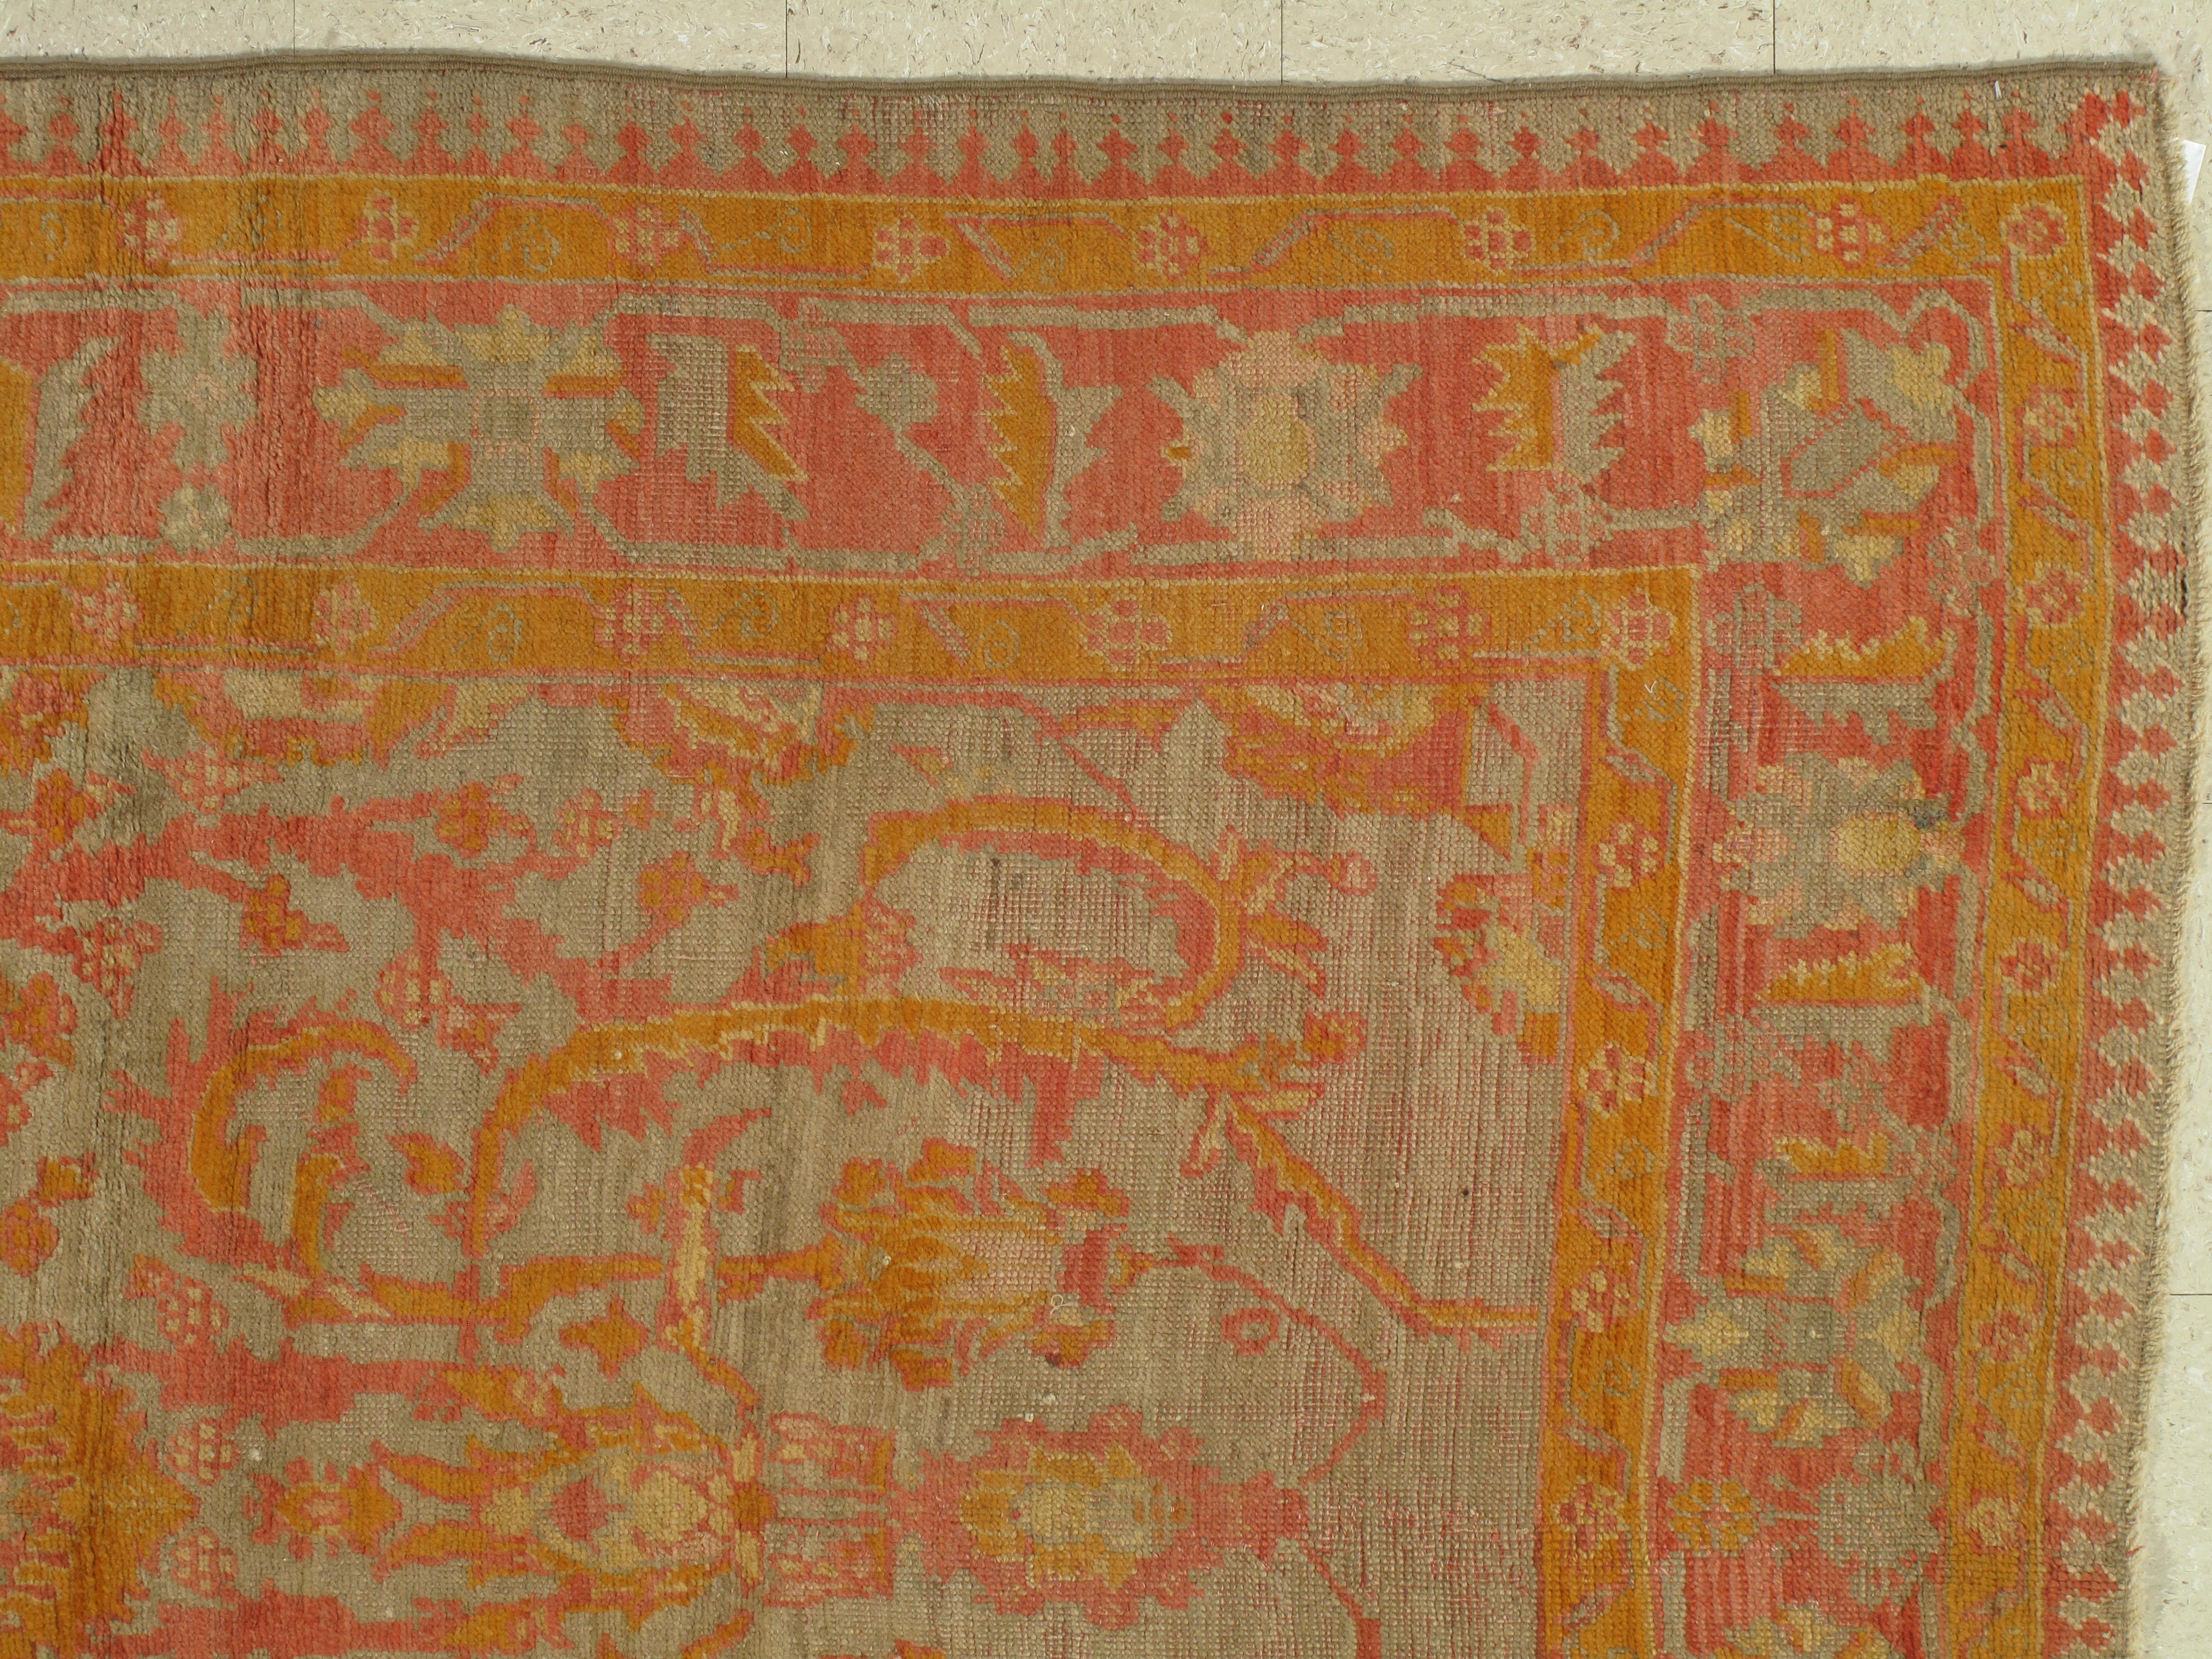 Hand-Knotted Antique Oushak Carpet, Handmade Turkish Oriental Rug, Saffron, Coral, Light Blue For Sale